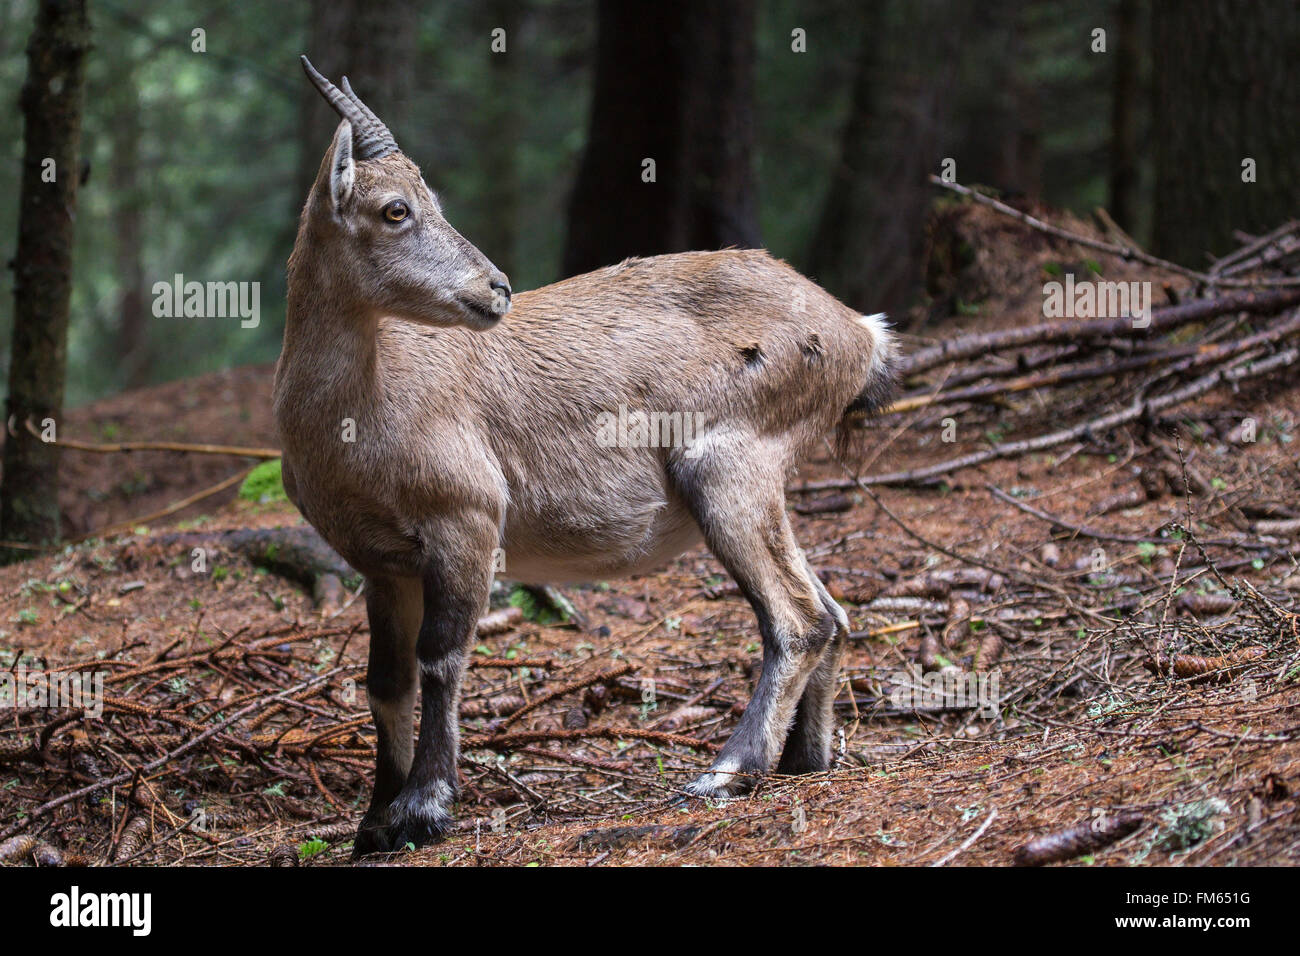 Baby alpine ibex, Capra ibex, looking around in a wood. Stock Photo